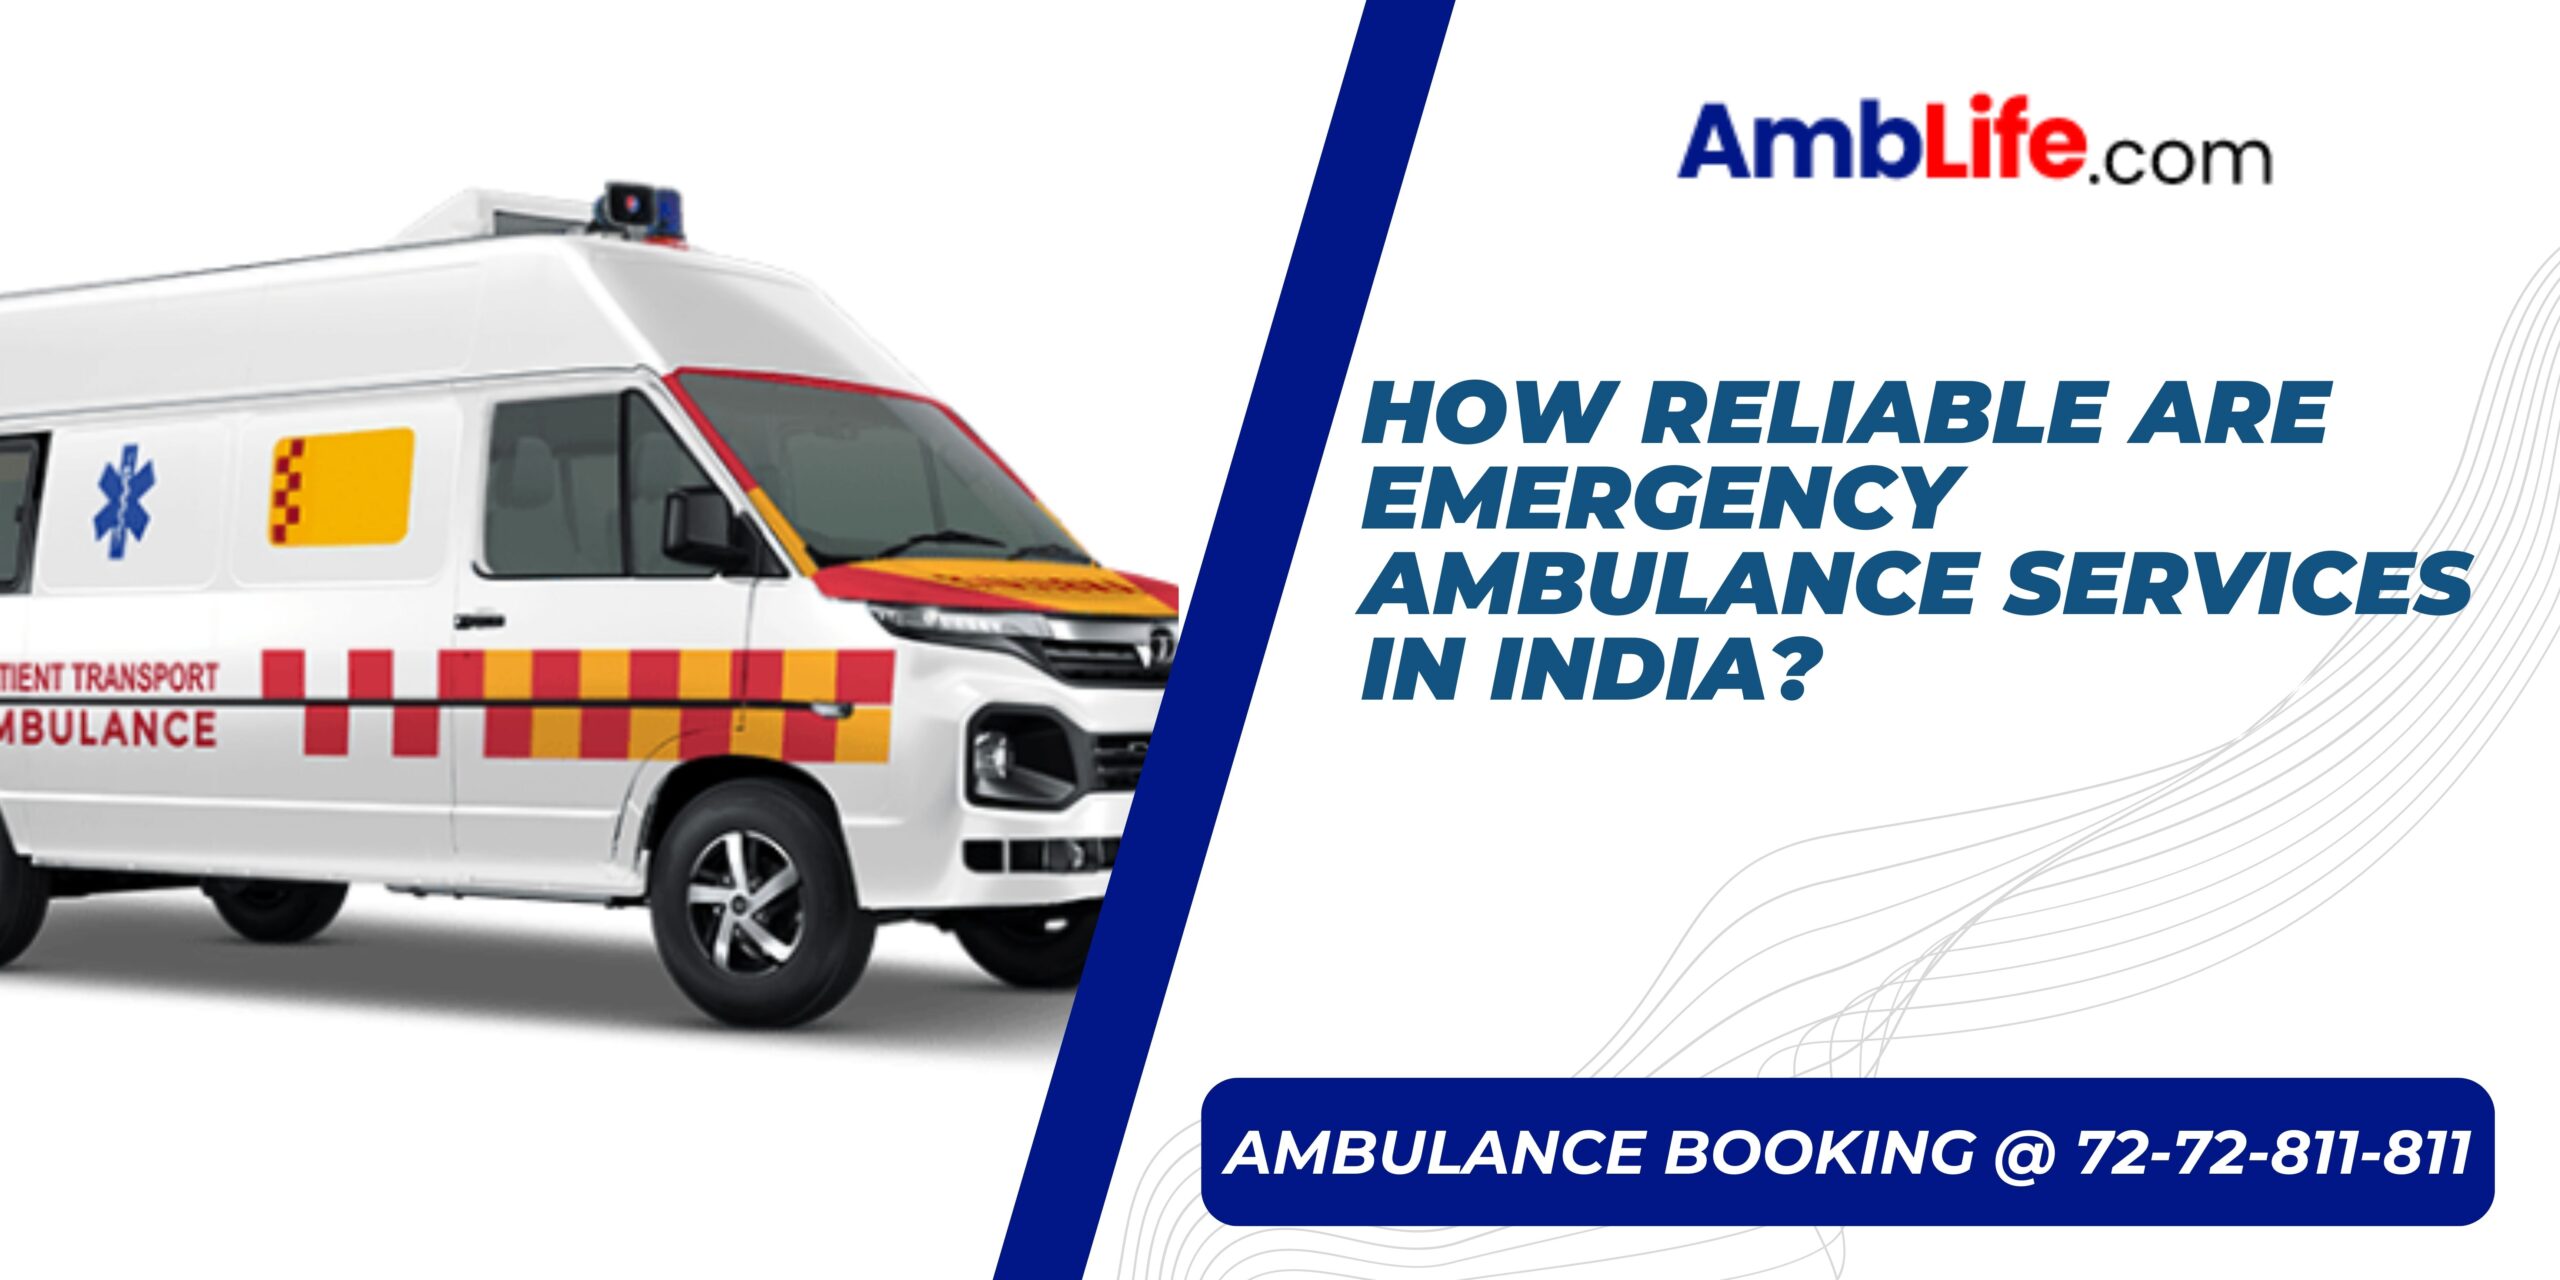 Ambulance Service in India